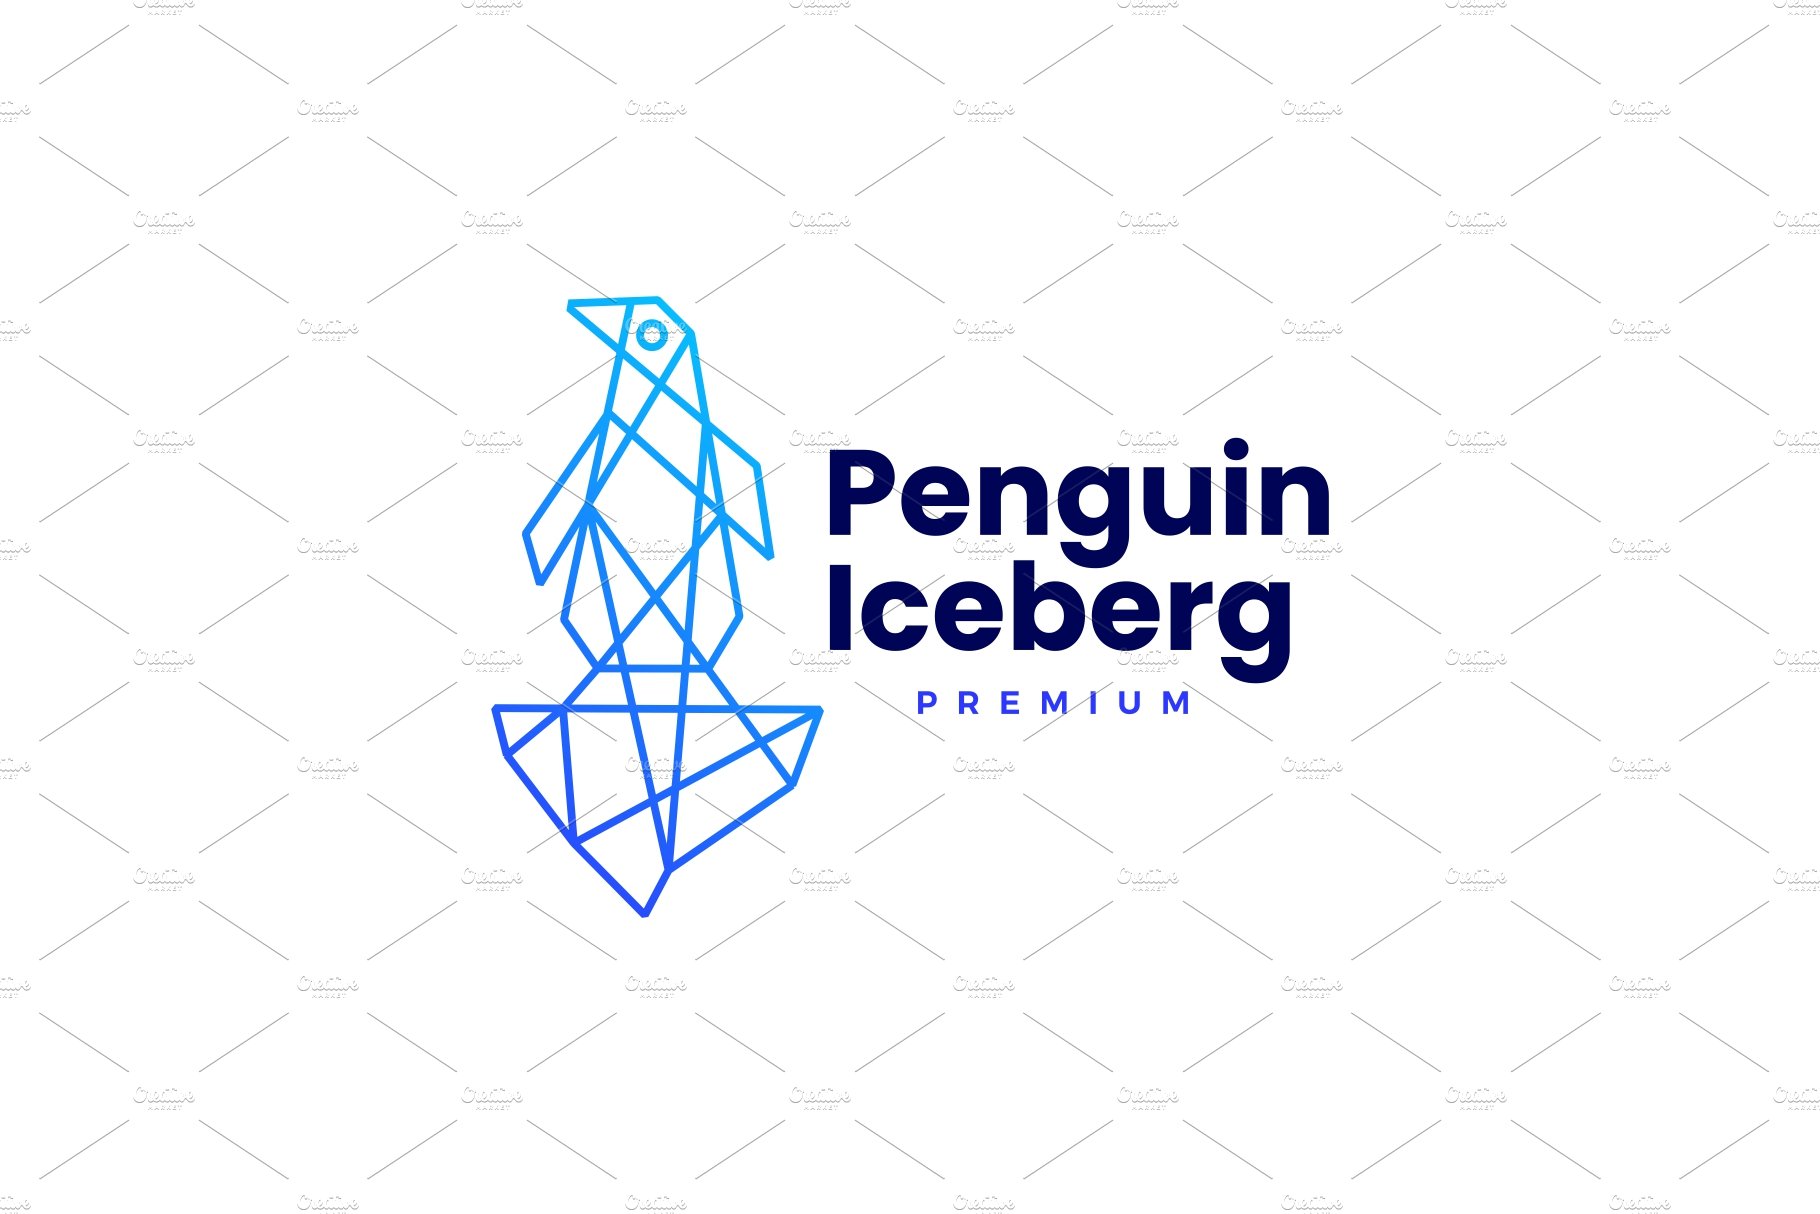 penguin ice berg geometric polygonal cover image.